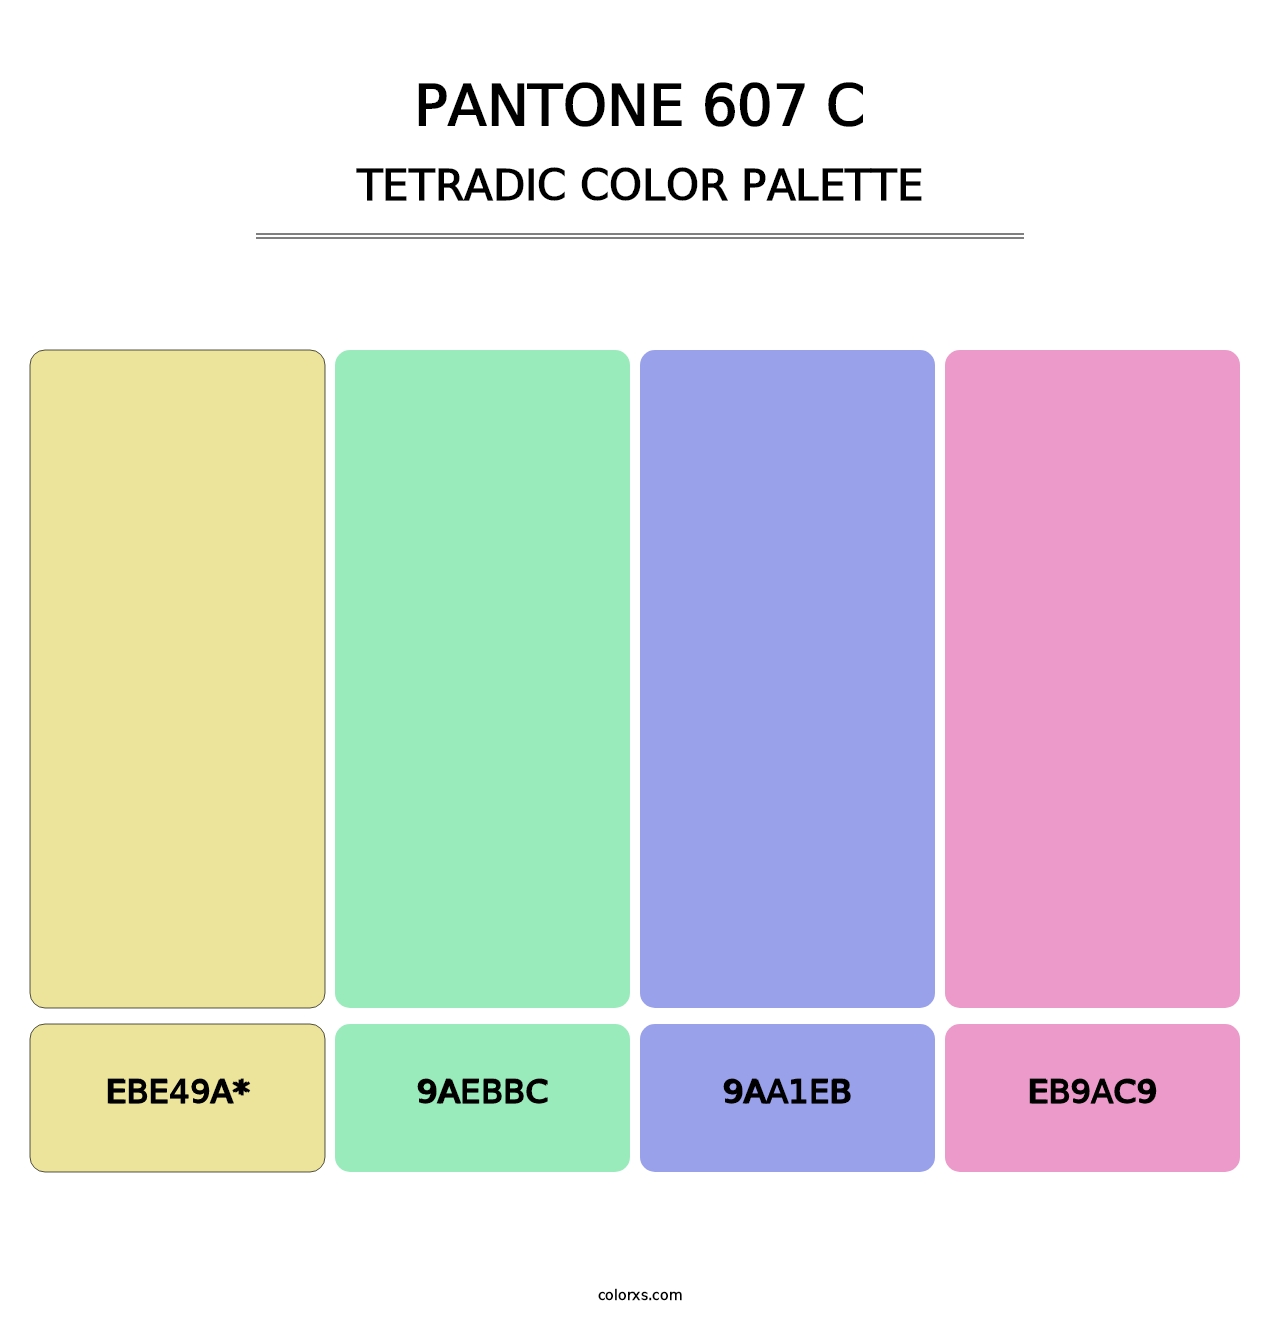 PANTONE 607 C - Tetradic Color Palette